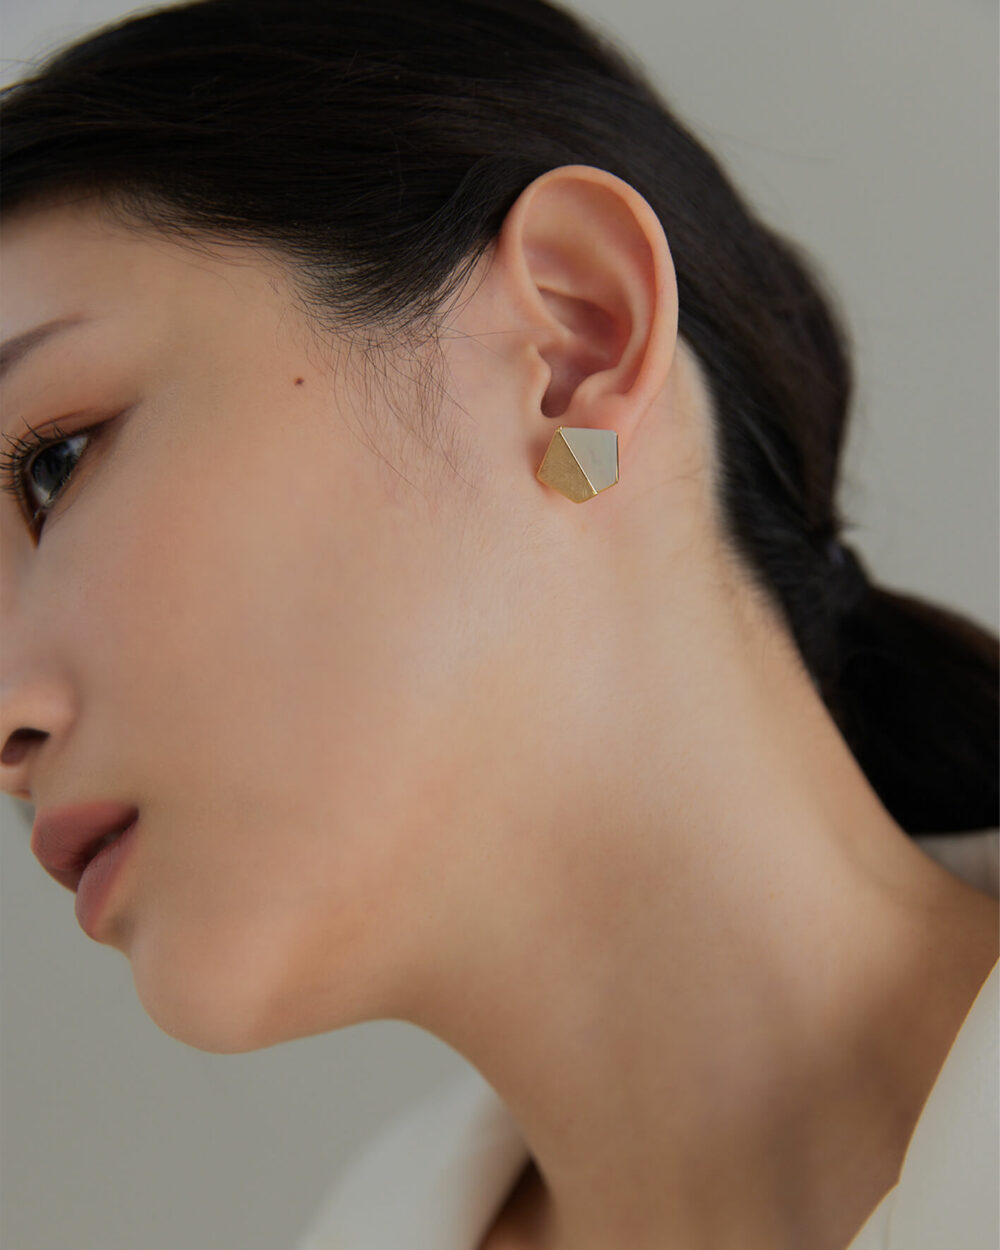 Eco安珂,韓國飾品,韓國耳環,耳針式耳環,矽膠夾耳環,透明耳夾耳環,無痛耳夾耳環,珠貝耳環,幾何耳環